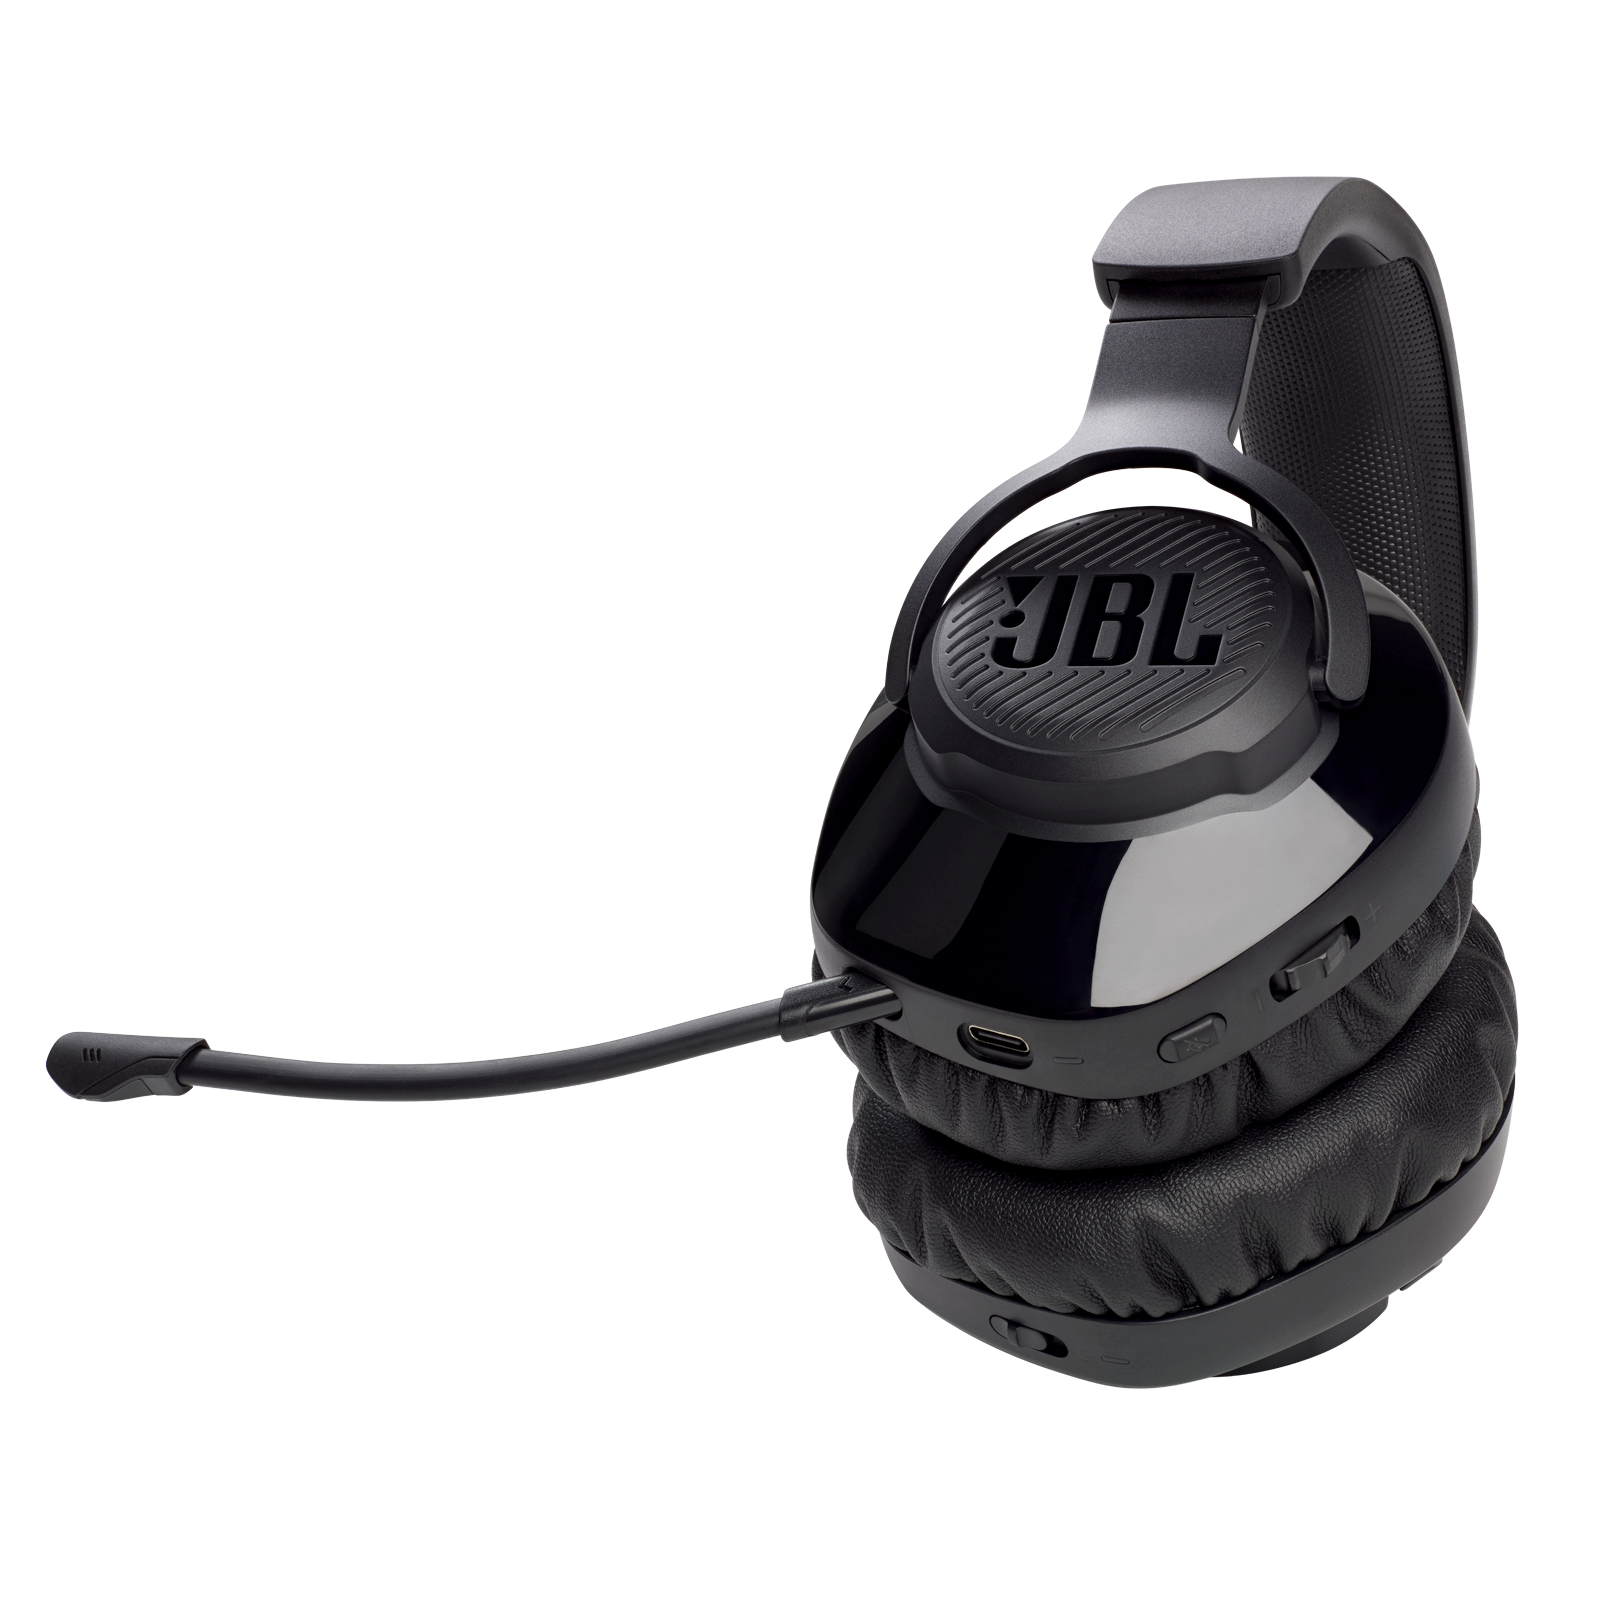 JBL Quantum 350 Wireless - Black - Wireless PC gaming headset with detachable boom mic - Detailshot 2